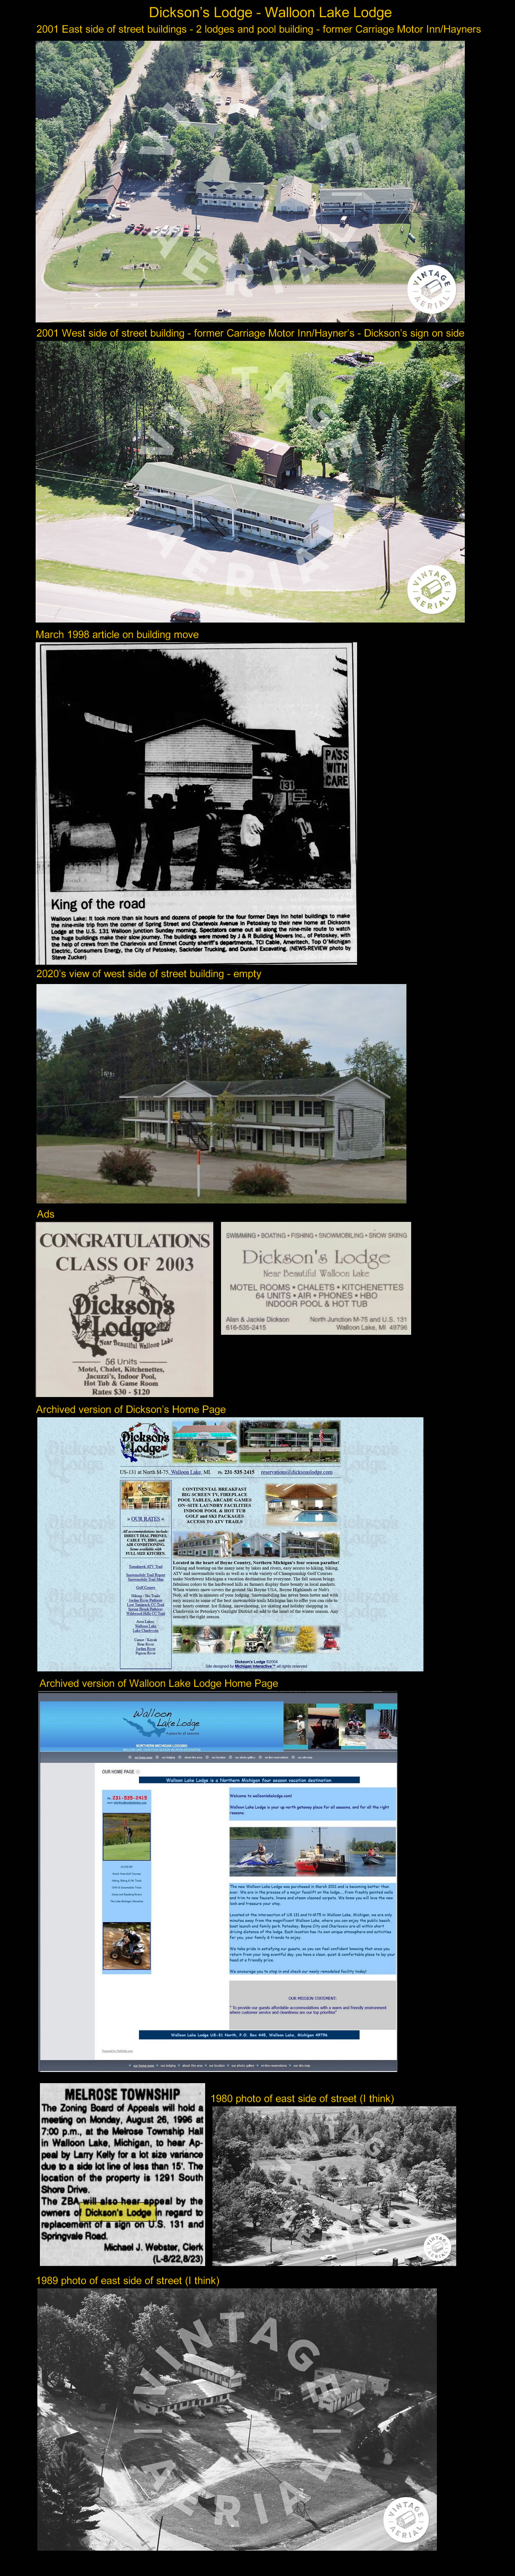 Hayners Motel - Dicksons Walloon Lake Lodges Historical Info